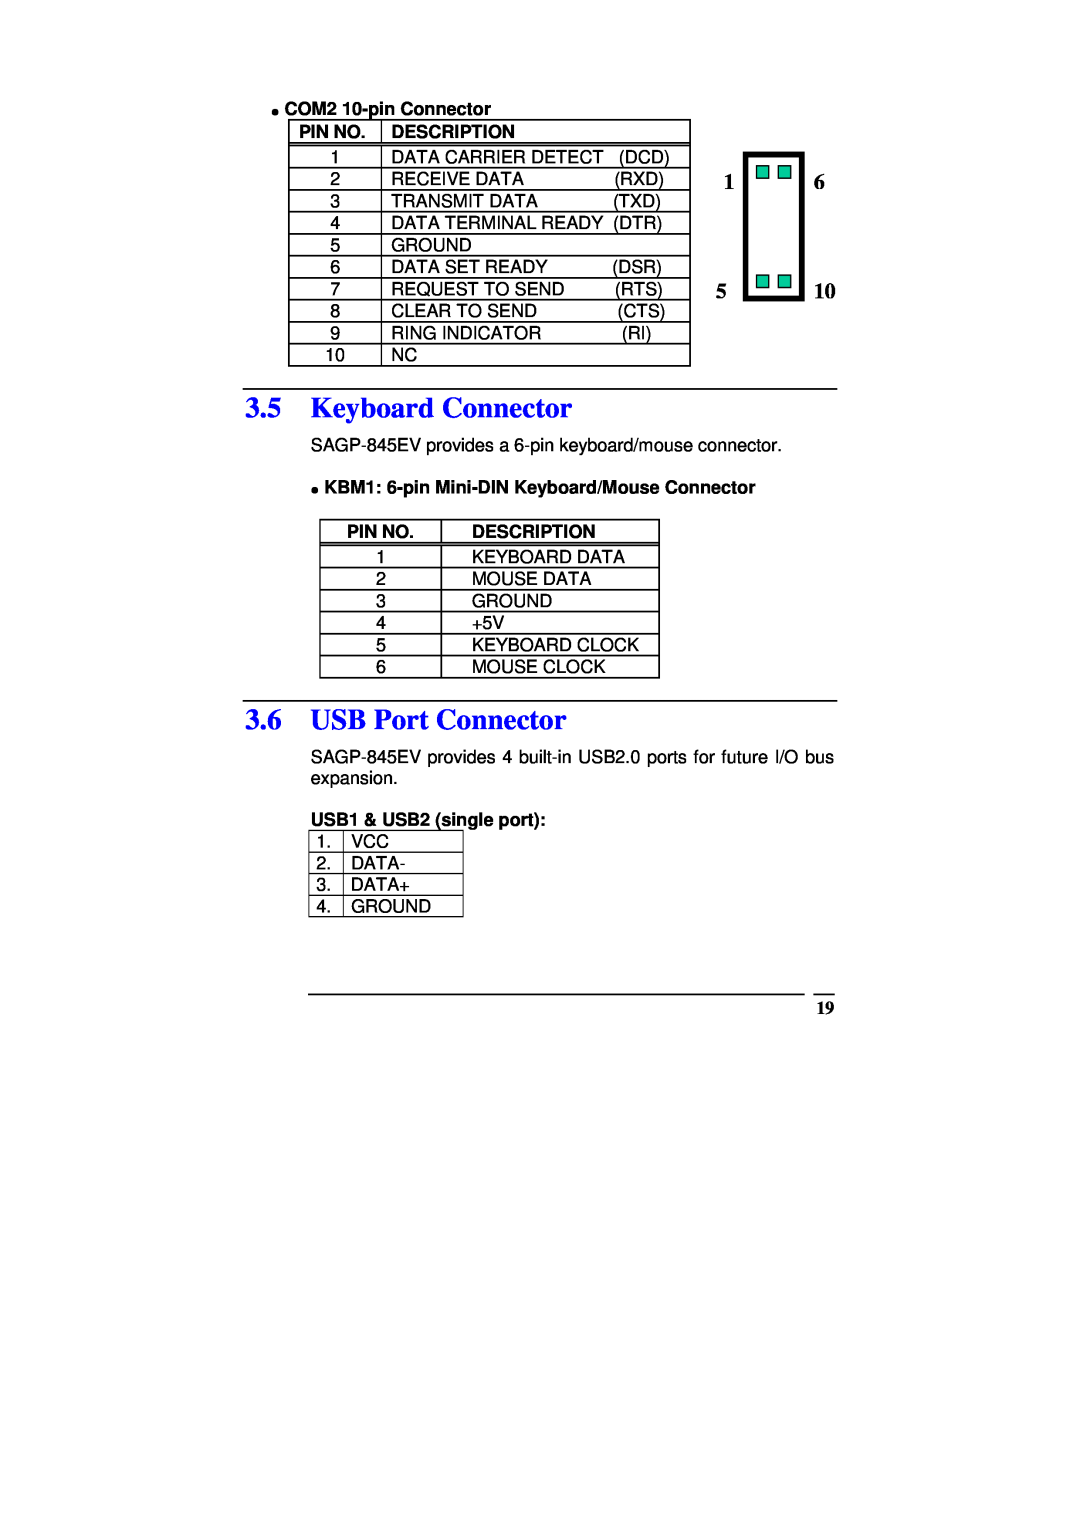 ICP DAS USA SAGP-845EV manual Keyboard Connector, USB Port Connector, COM2 10-pin Connector PIN NO. DESCRIPTION, Pin No 